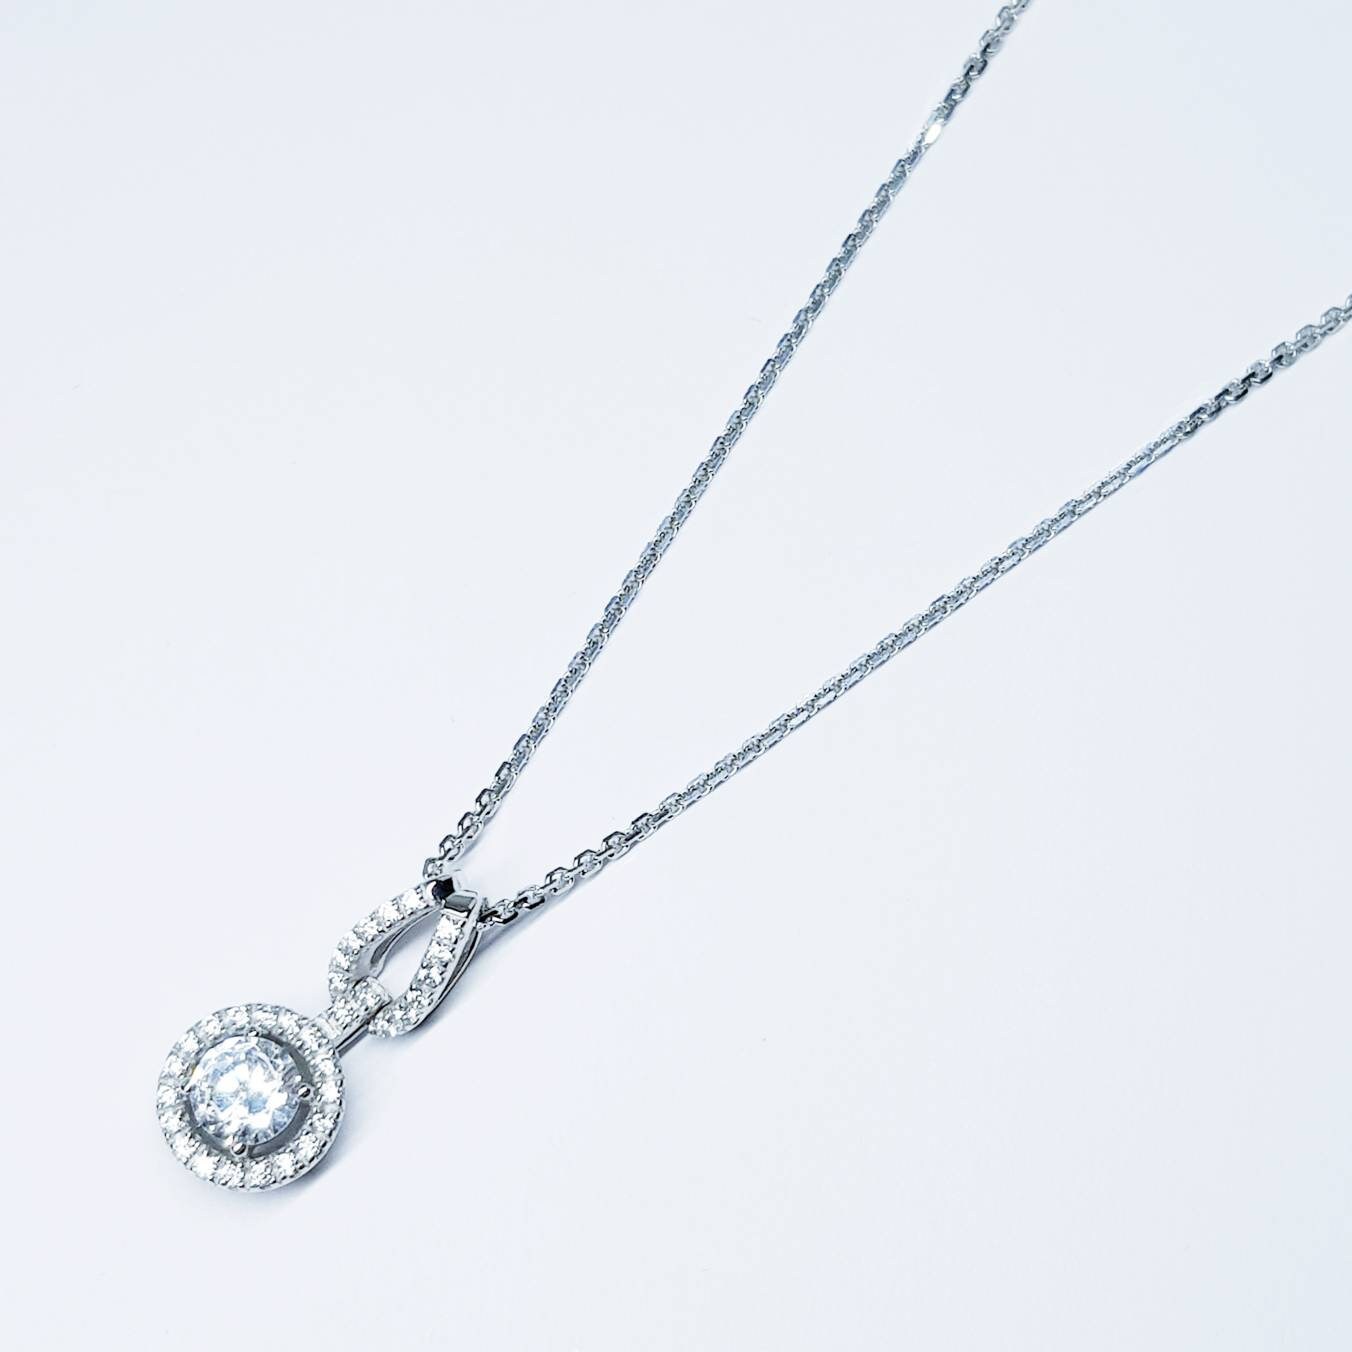 Dainty sterling silver vinatge halo necklace with split bale